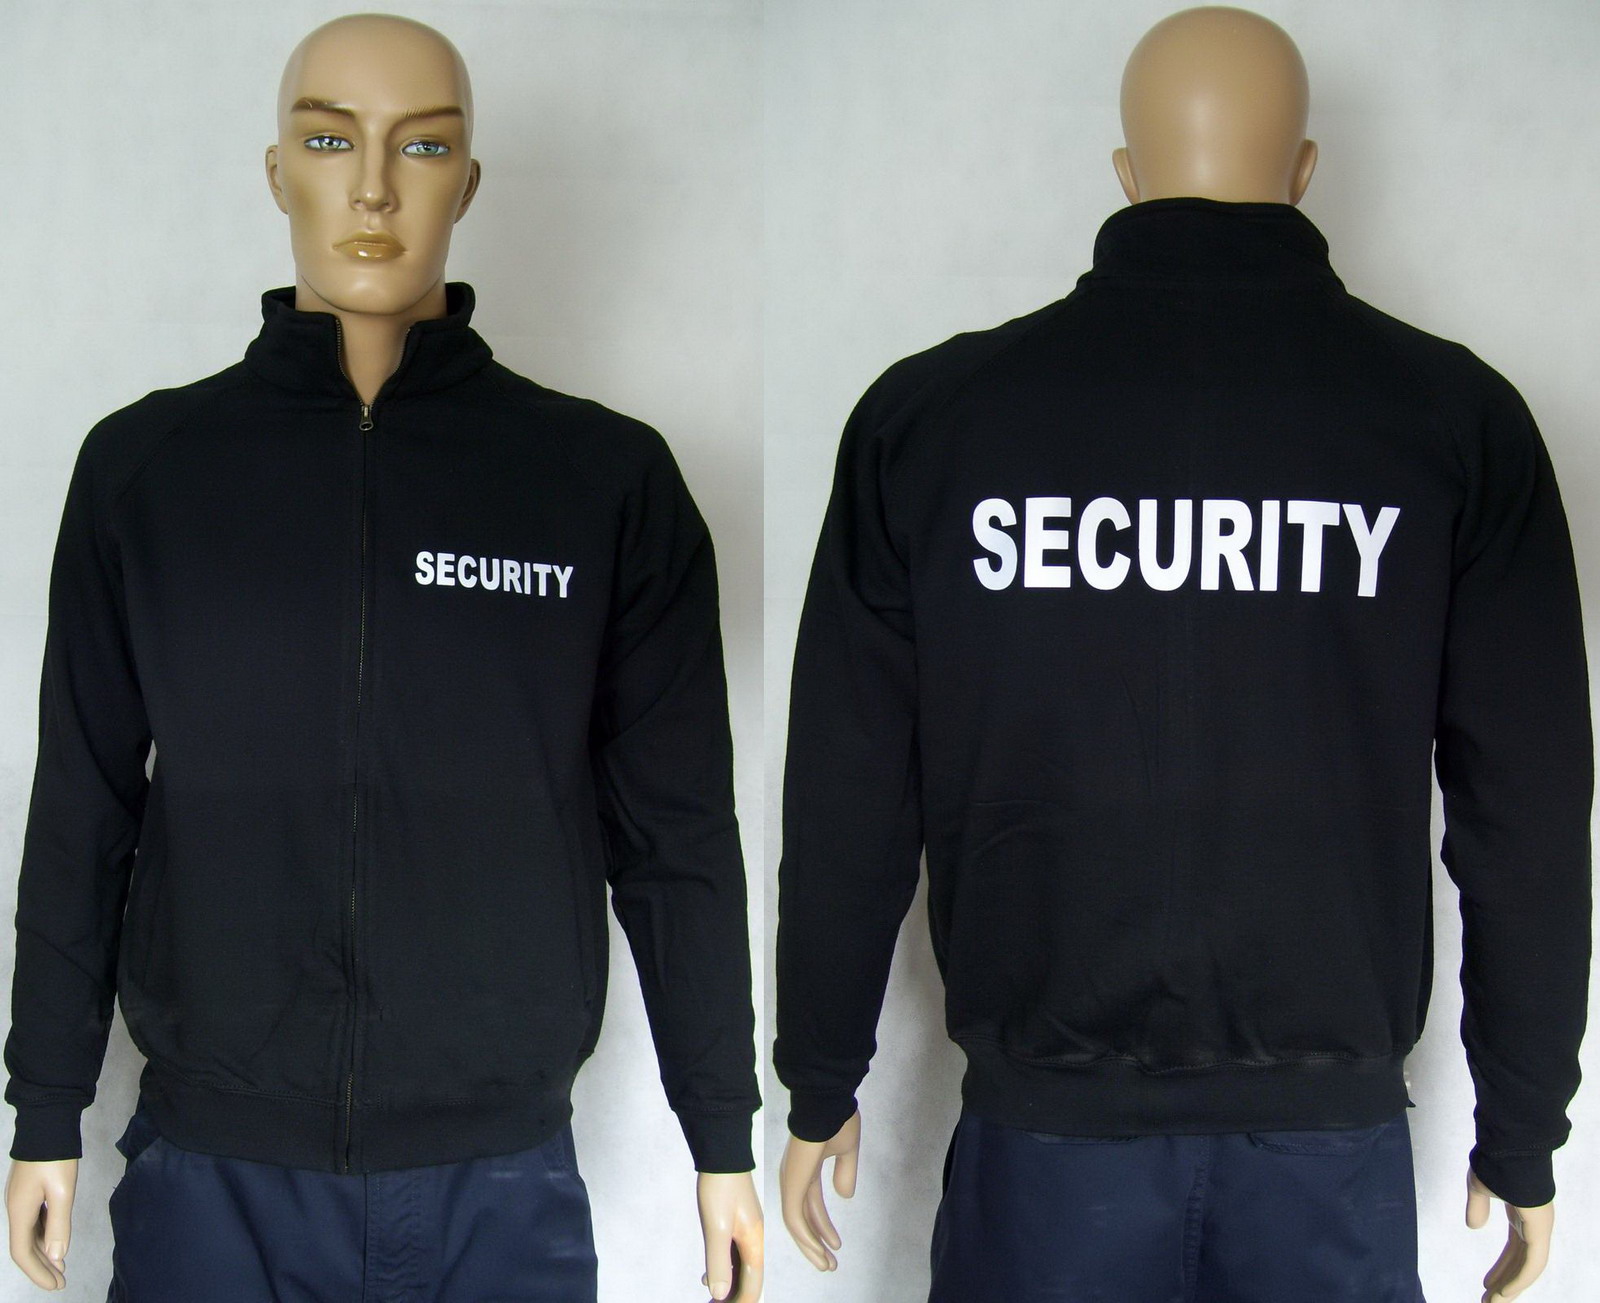 SECURITY SICHERHEIT Sweatjacke Jacke in schwarz oder marineblau Druckfarben SE7 